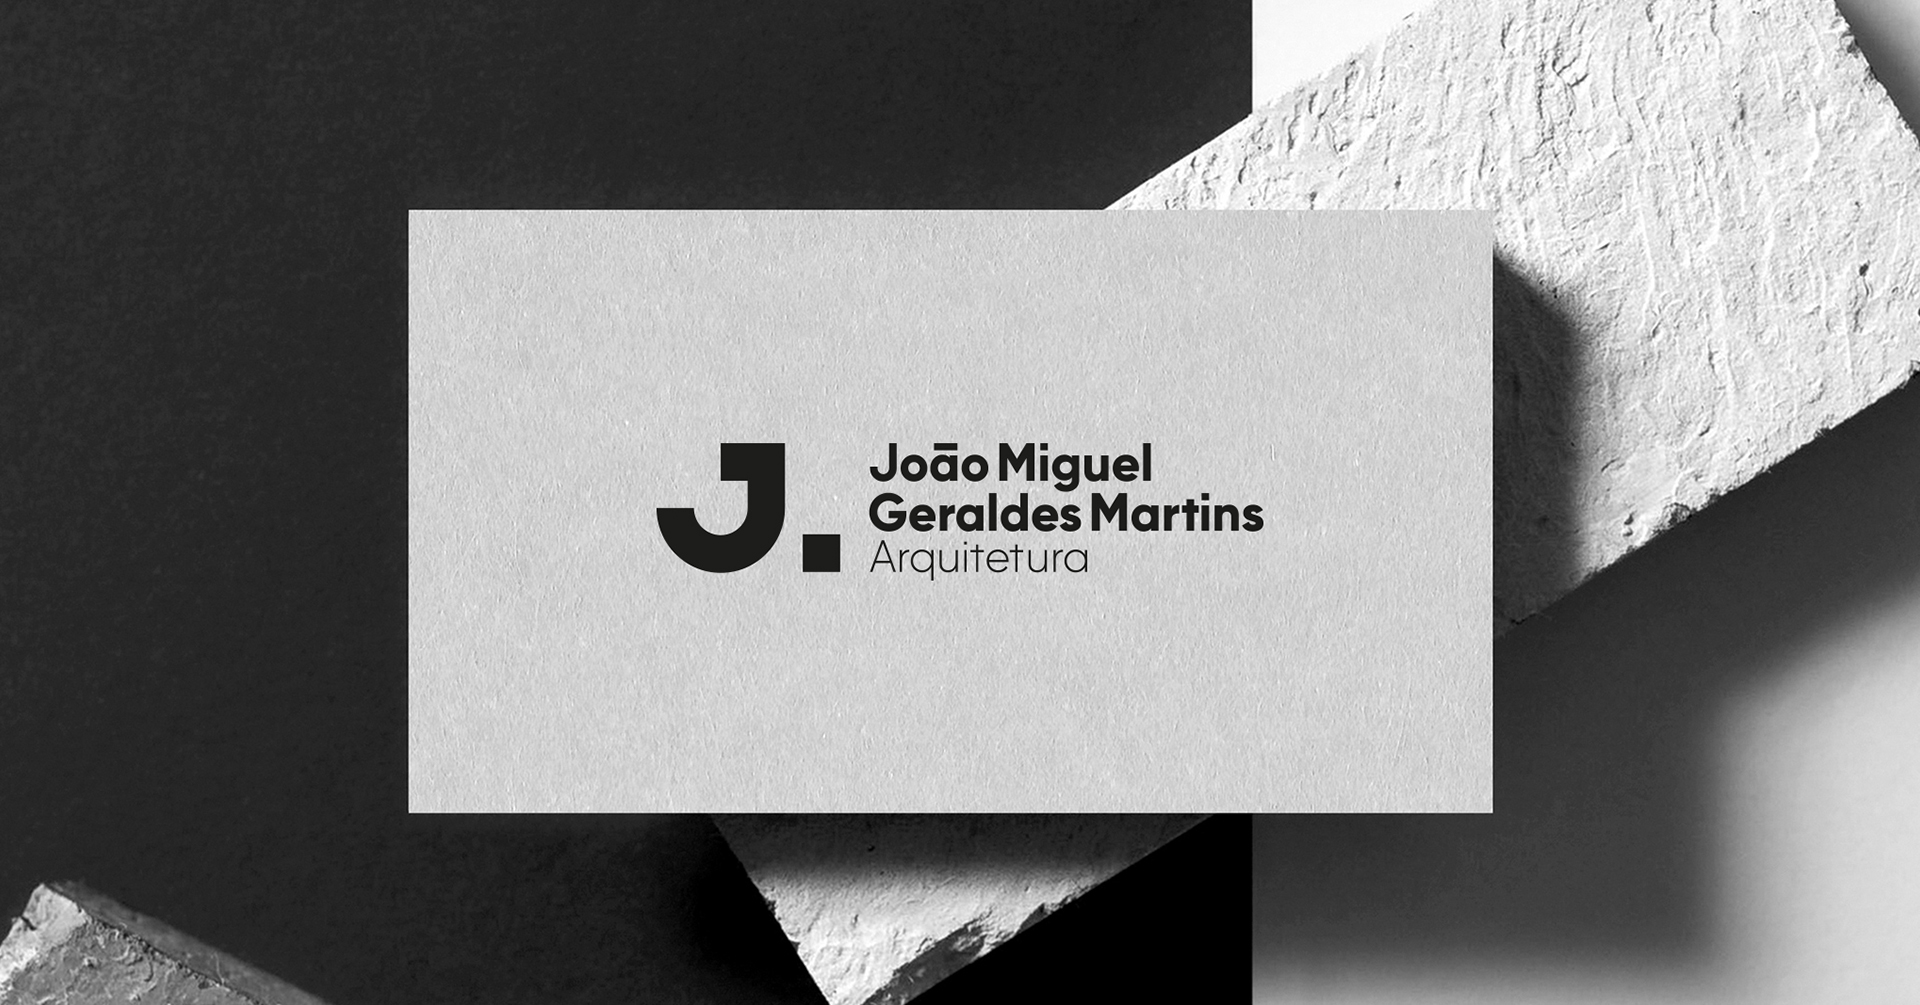 JMGM - João Miguel Geraldes Martins